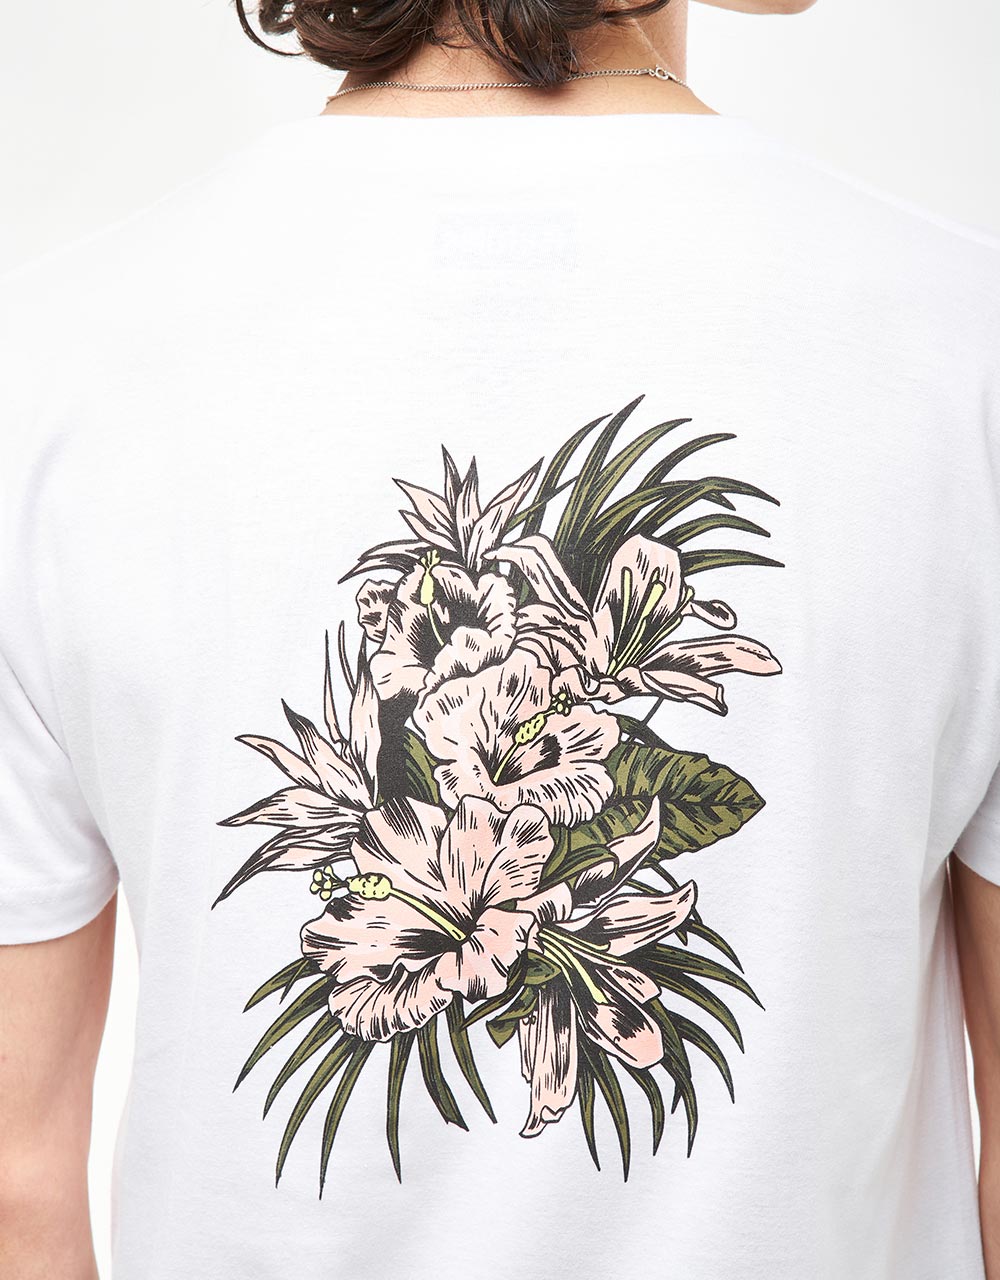 Etnies Tropical T-Shirt - White